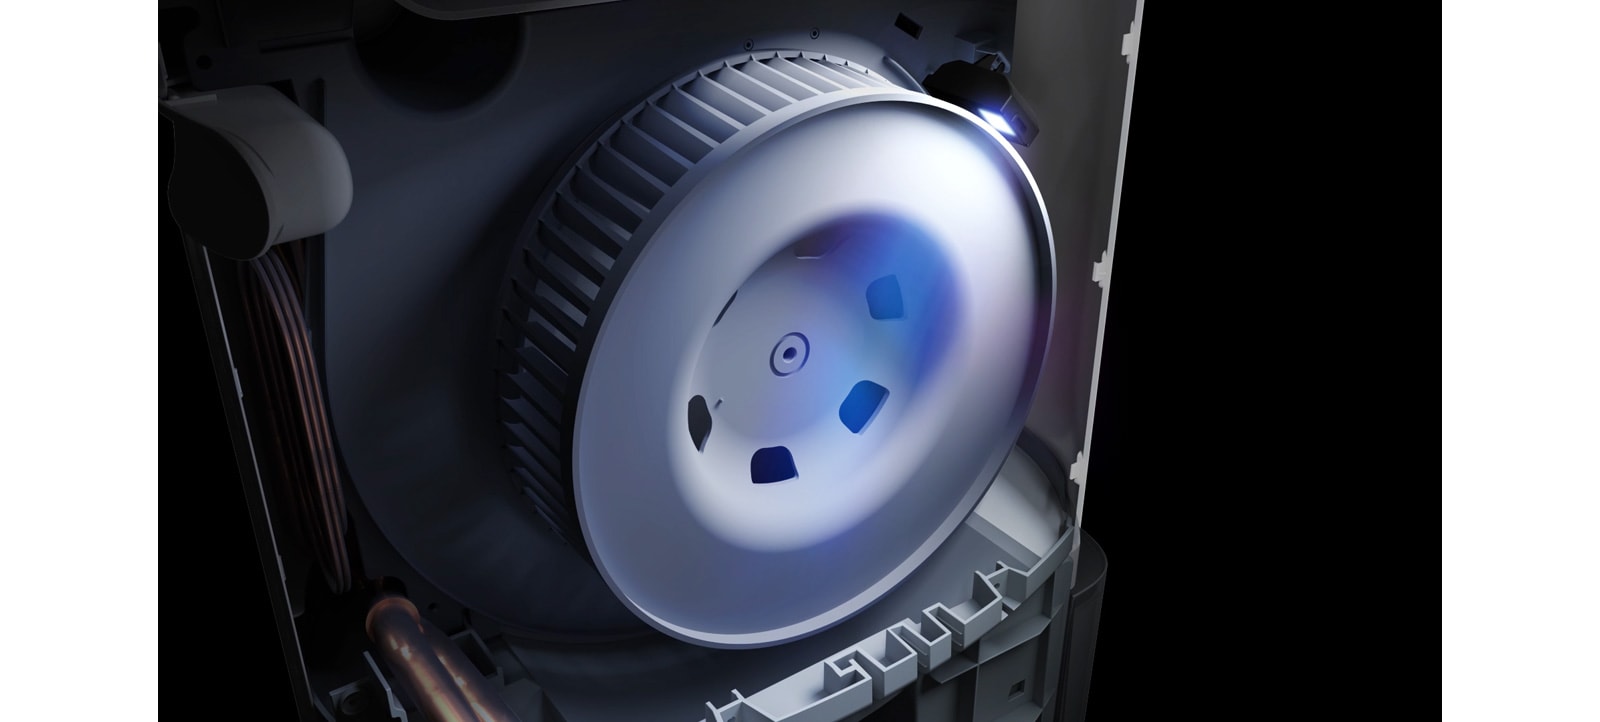 UV LED 燈照射在除濕機內的風力發電風扇上。